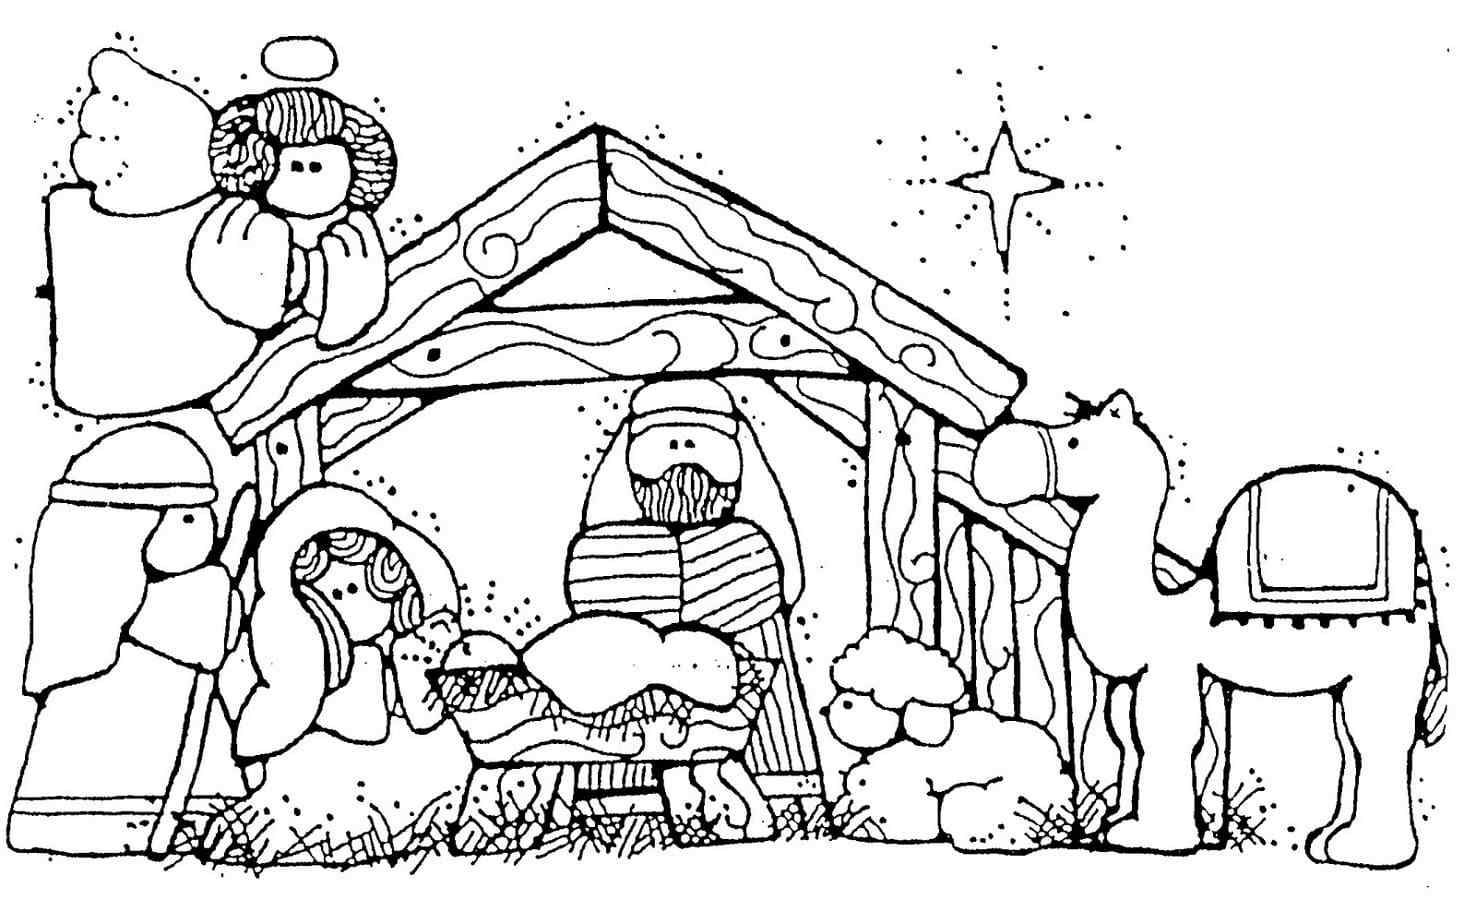 The Birth Of Jesus Christ